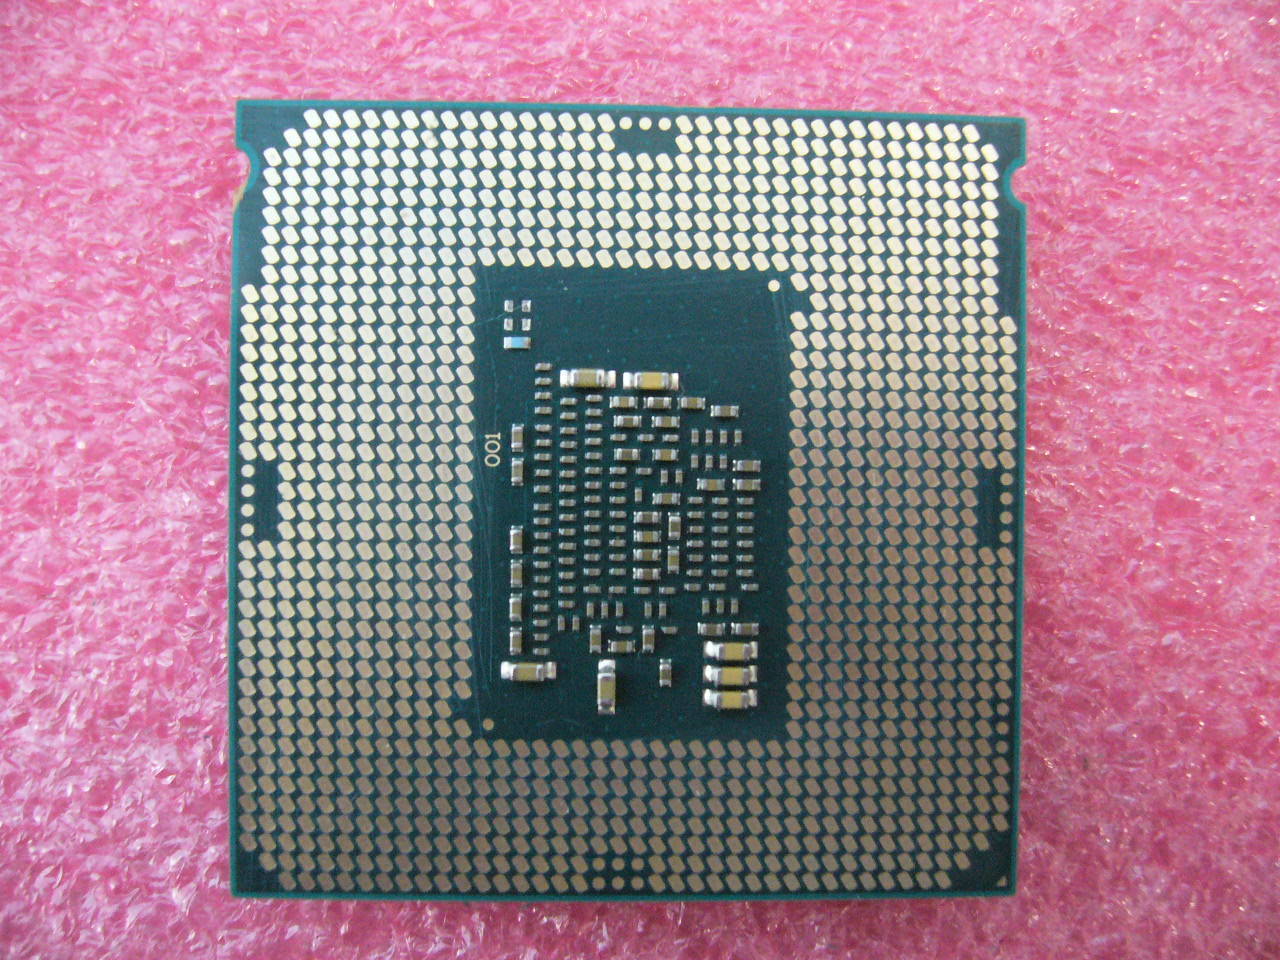 QTY 1x Intel CPU i3-6100 Dual-Cores 3.70Ghz 3MB LGA1151 SR2HG NOT WORKING - Click Image to Close